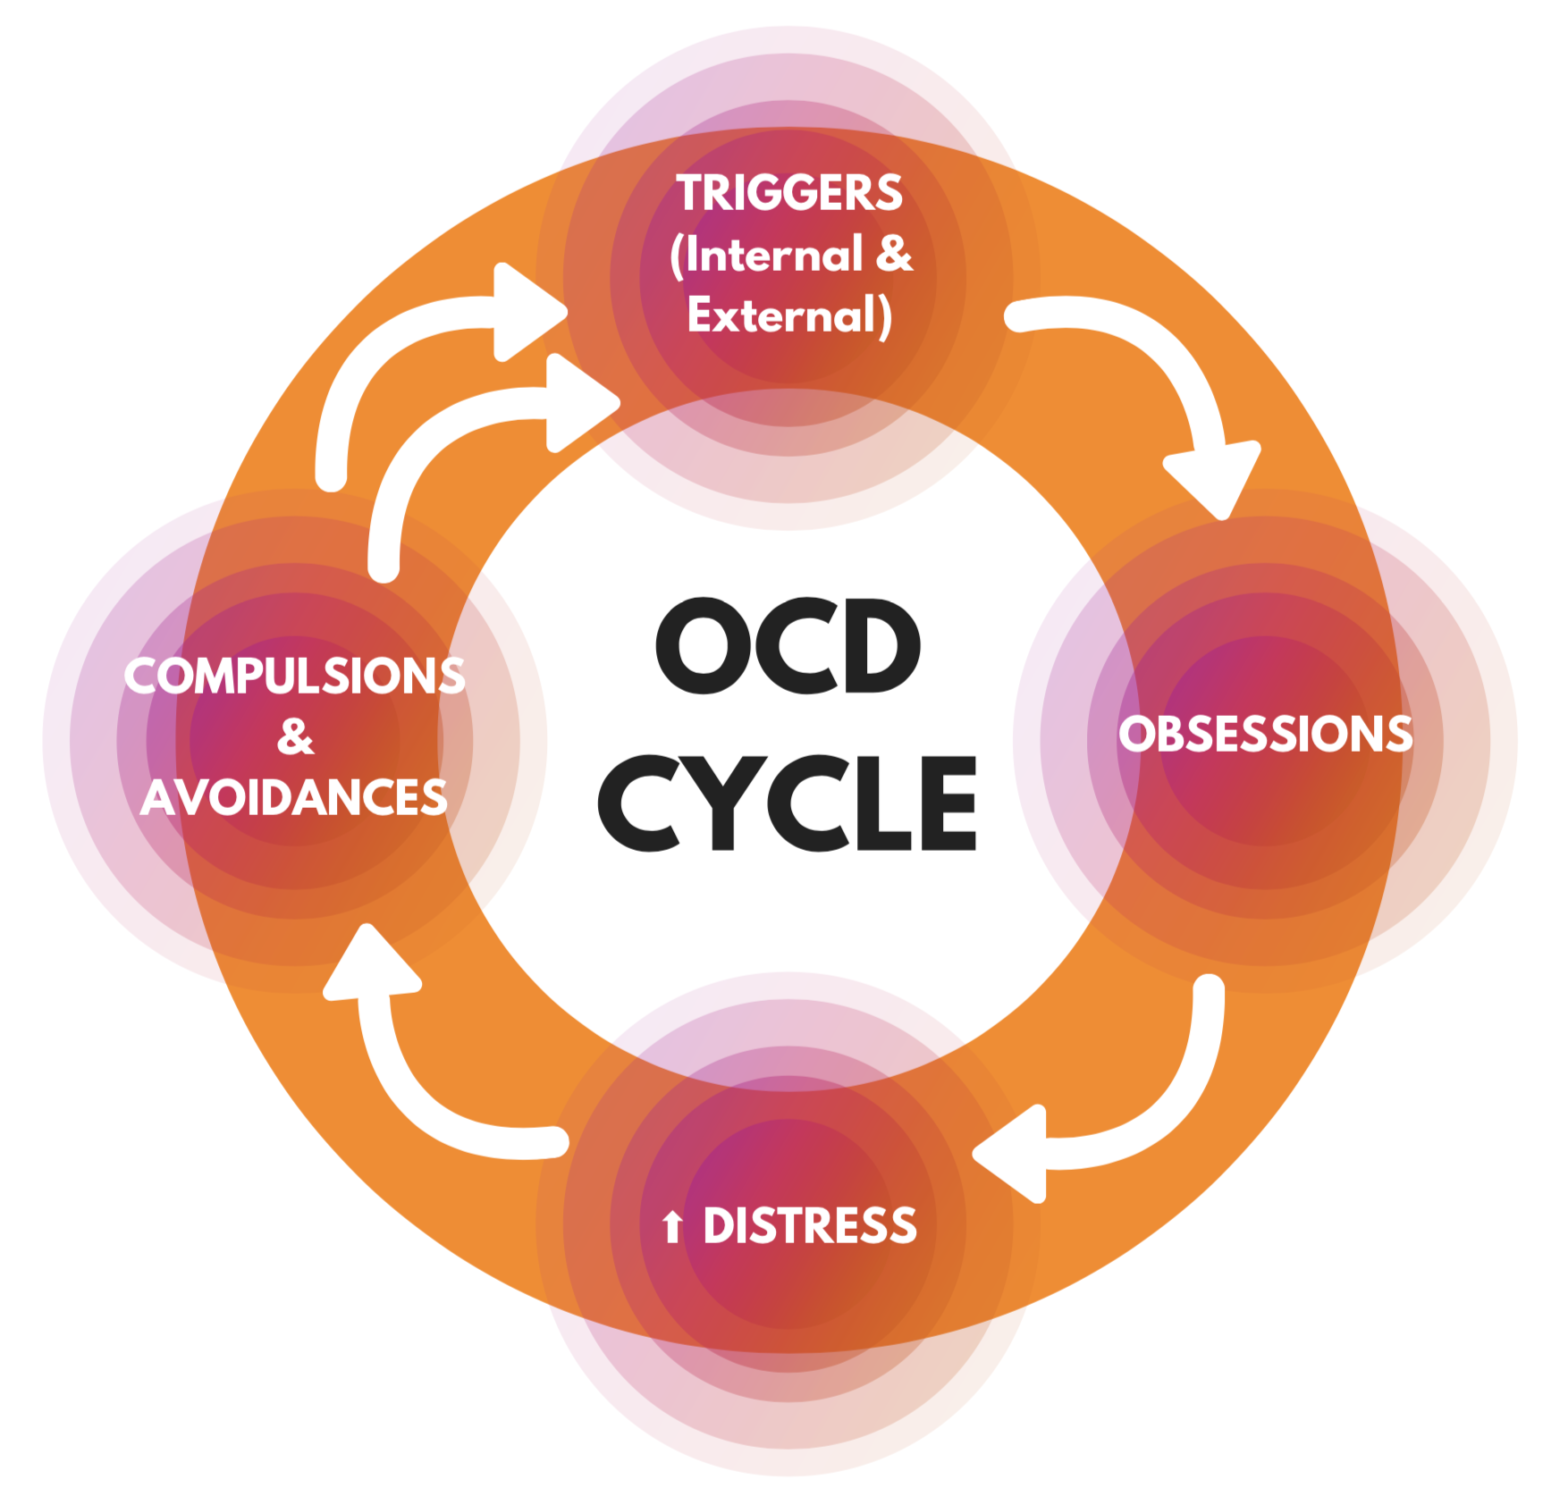 OCD Help from a Muslim Therapist